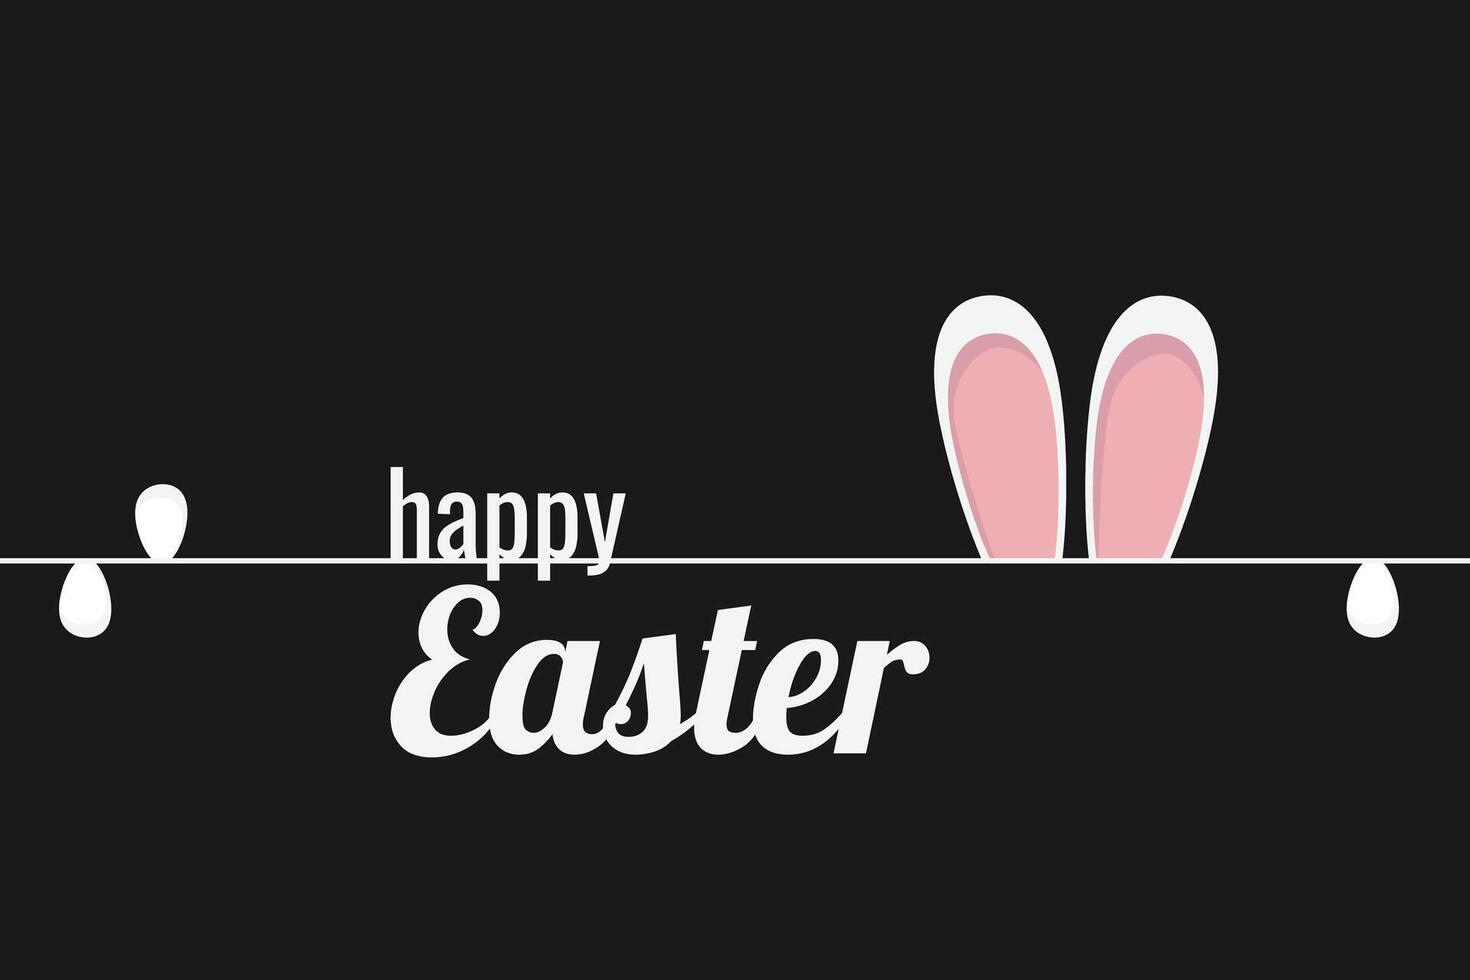 contento Pascua de Resurrección fiesta tarjeta con Pascua de Resurrección Conejo y huevos vector